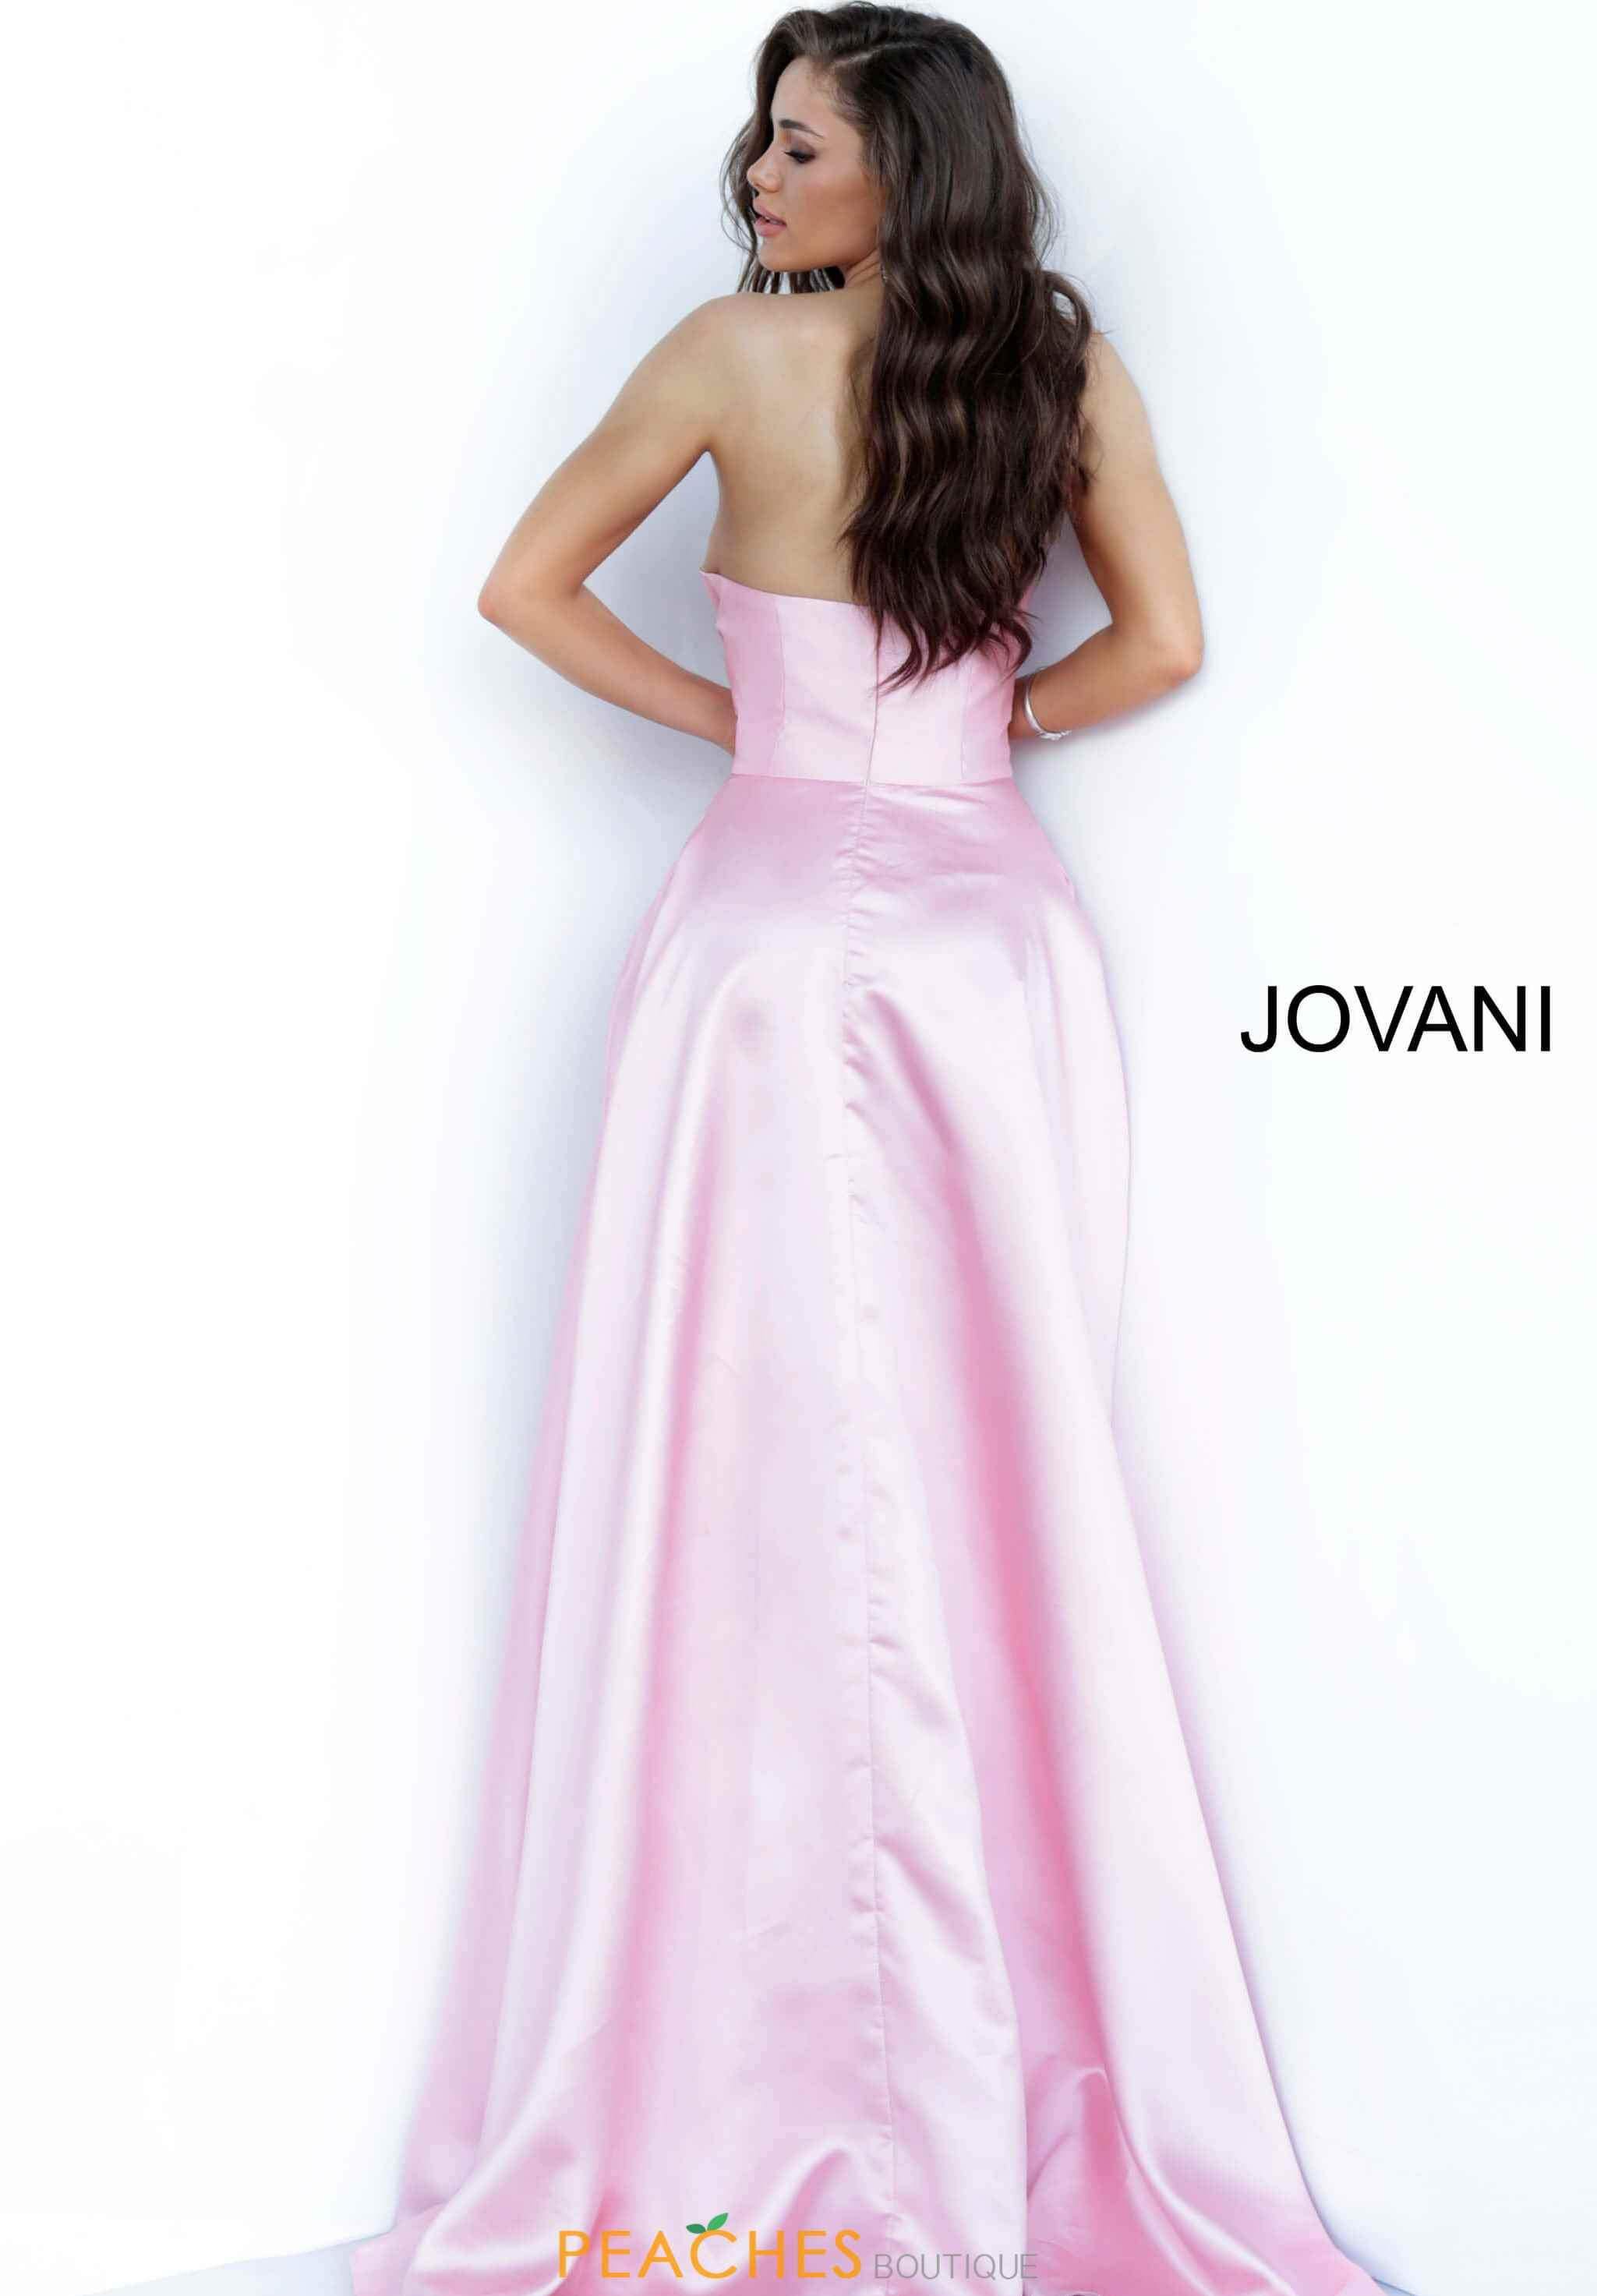 Jovani Strapless Sweetheart Neckline Prom Dress 1815 - The Dress Outlet